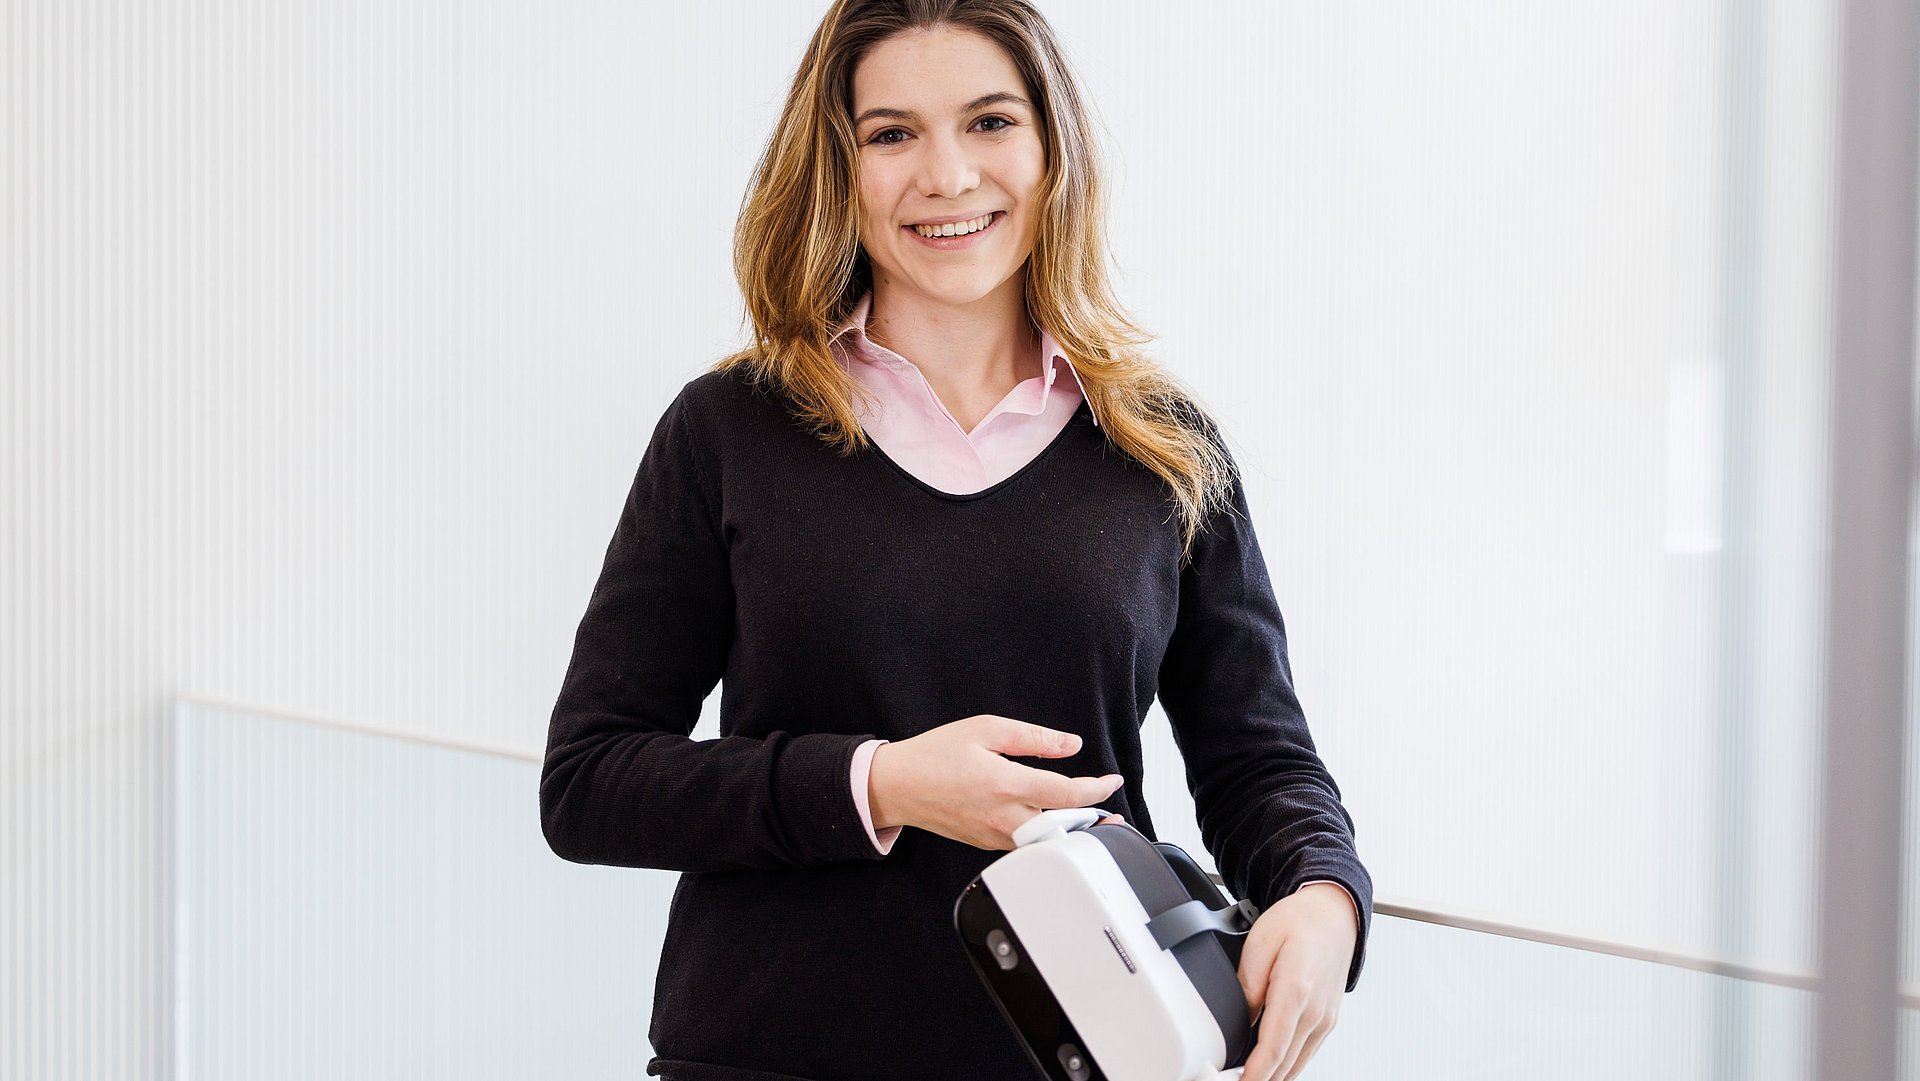 Chiara Marske studiert den Bachelorstudiengang Management & Technology am TUM Campus Heilbronn.